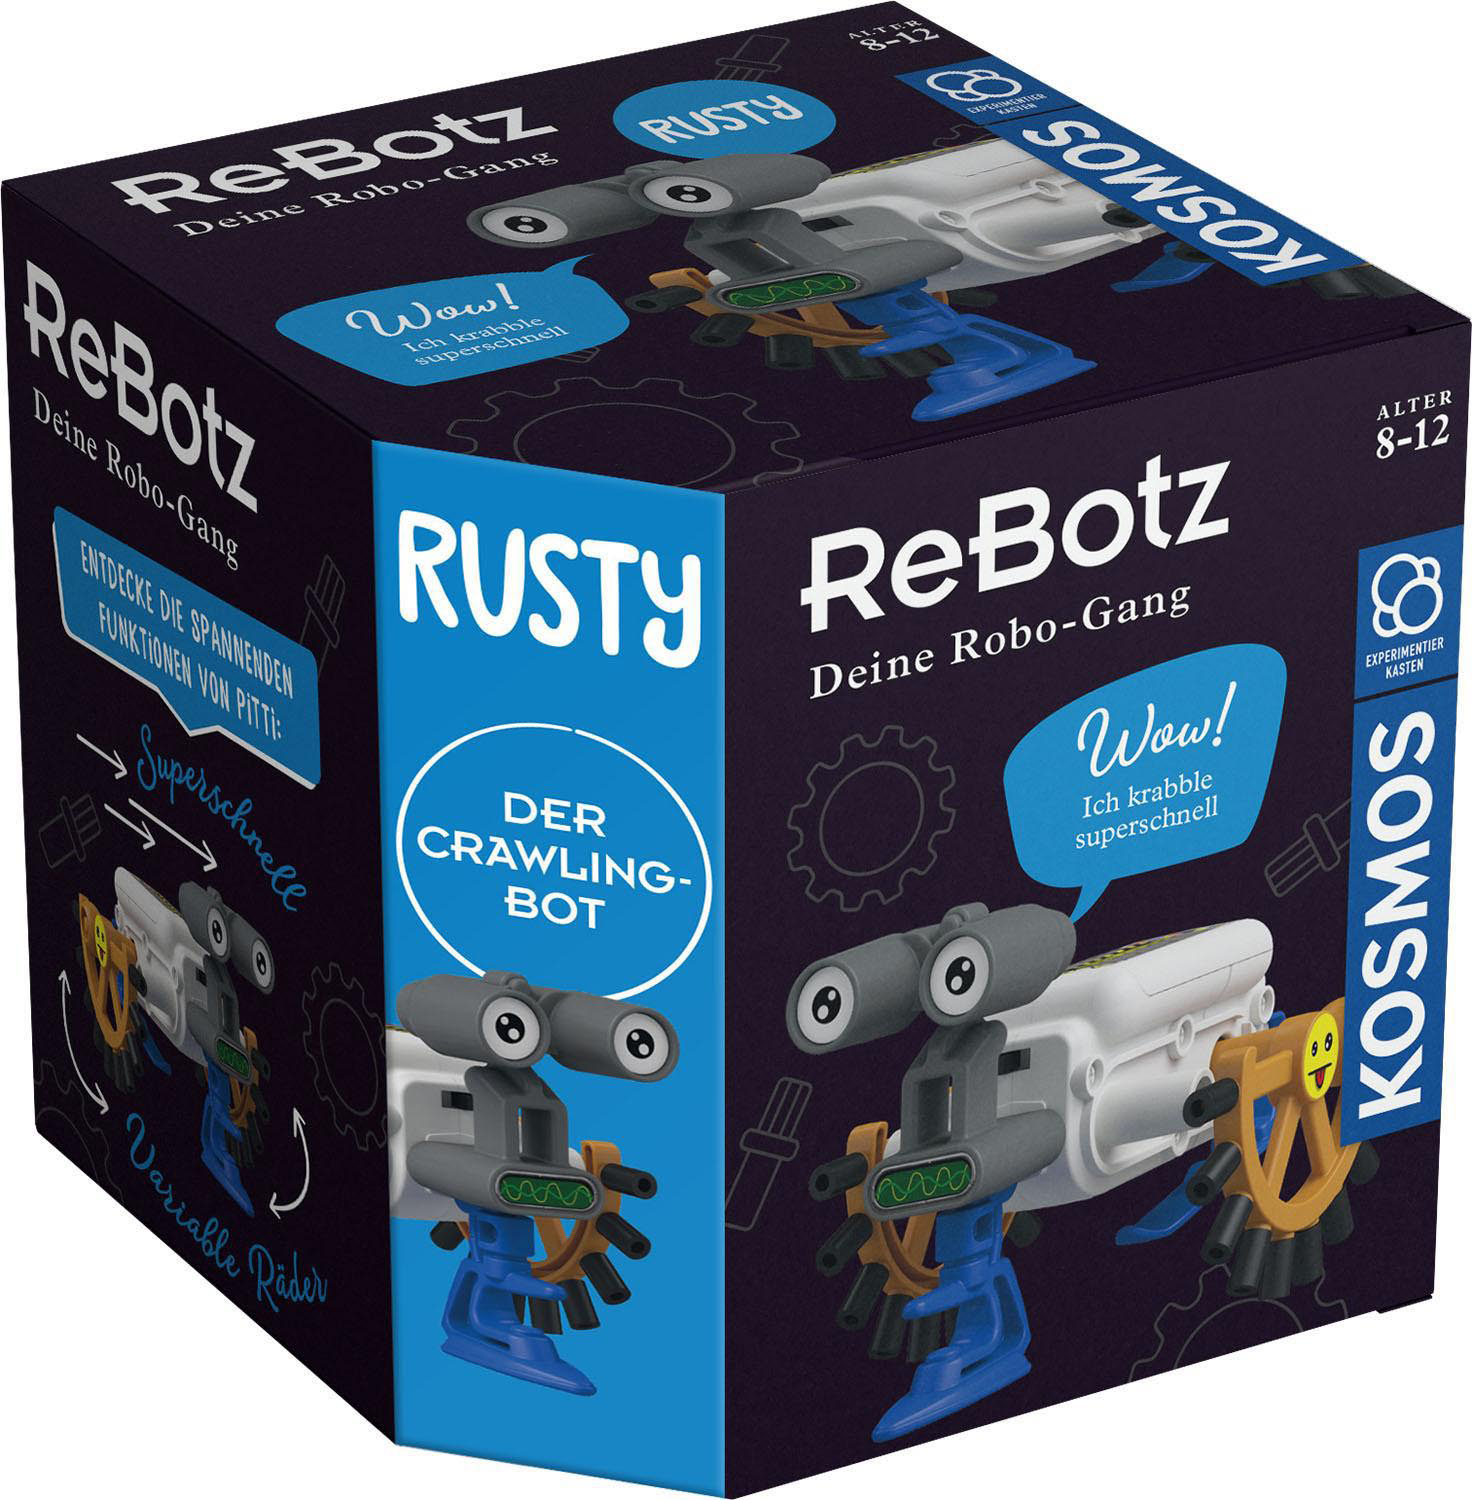 Crawling-Bot Mehrfarbig ReBotz Spielzeug-Roboter, der KOSMOS Rusty -